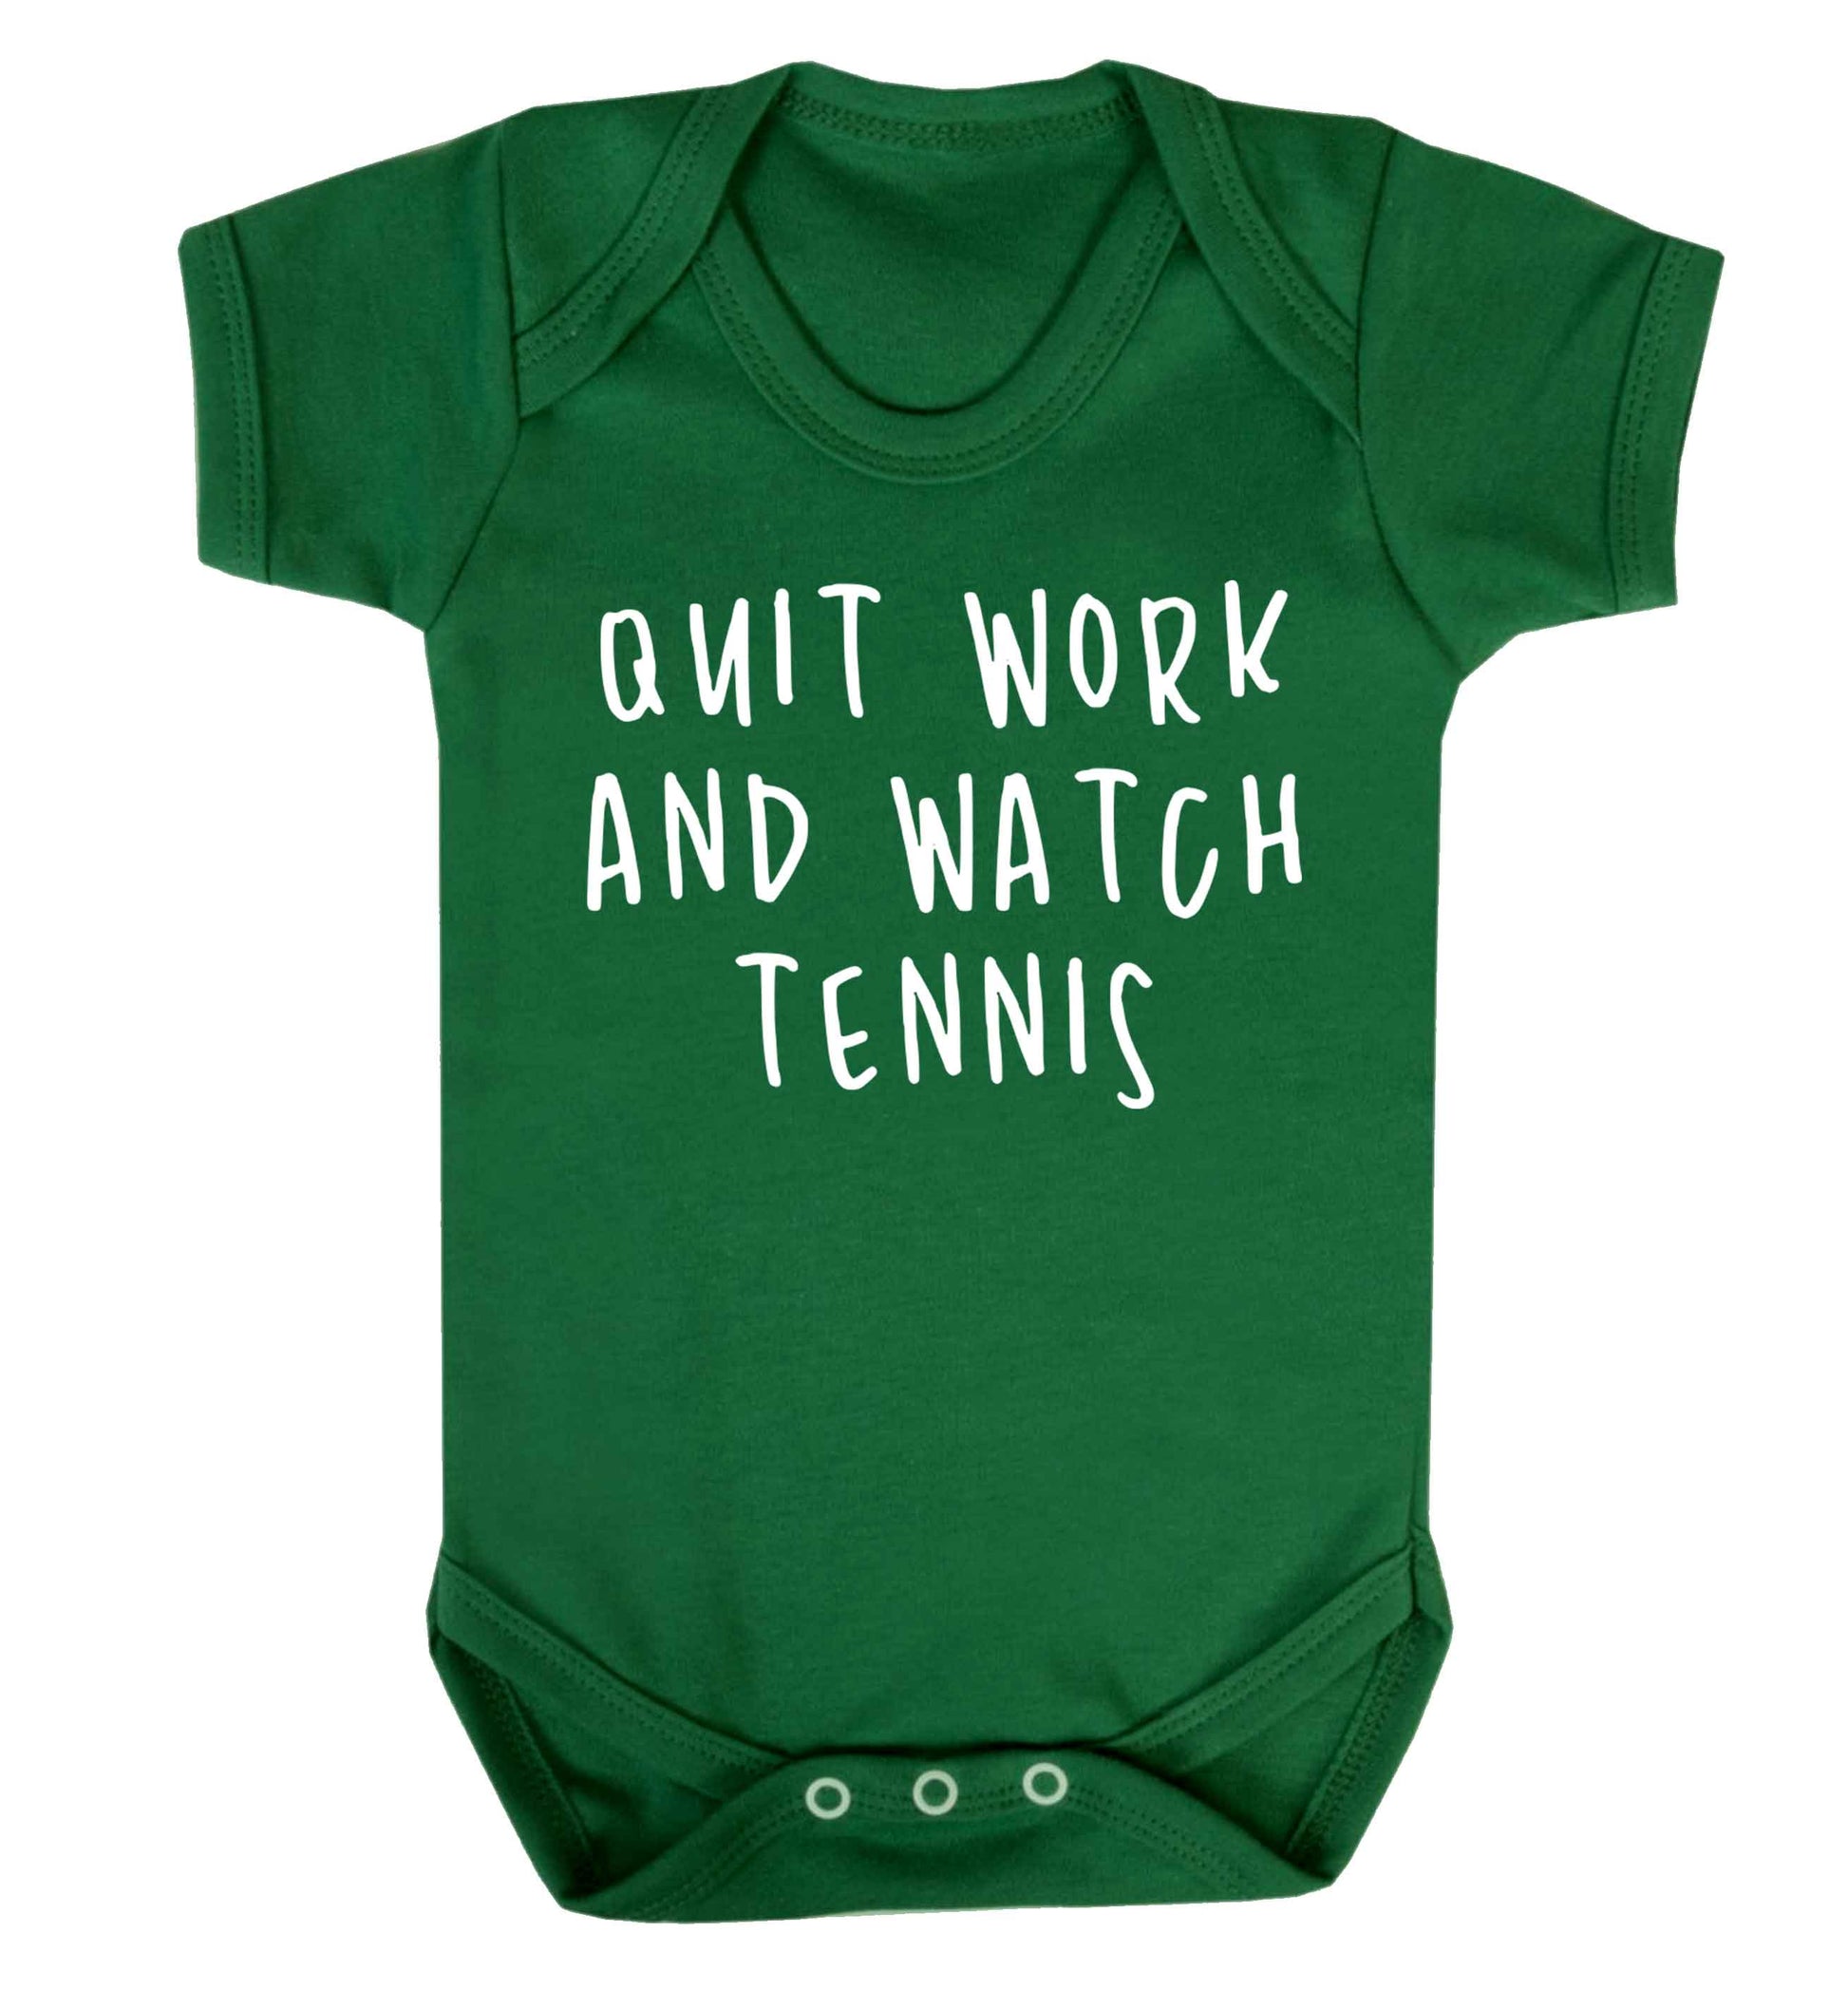 Quit work and watch tennis Baby Vest green 18-24 months